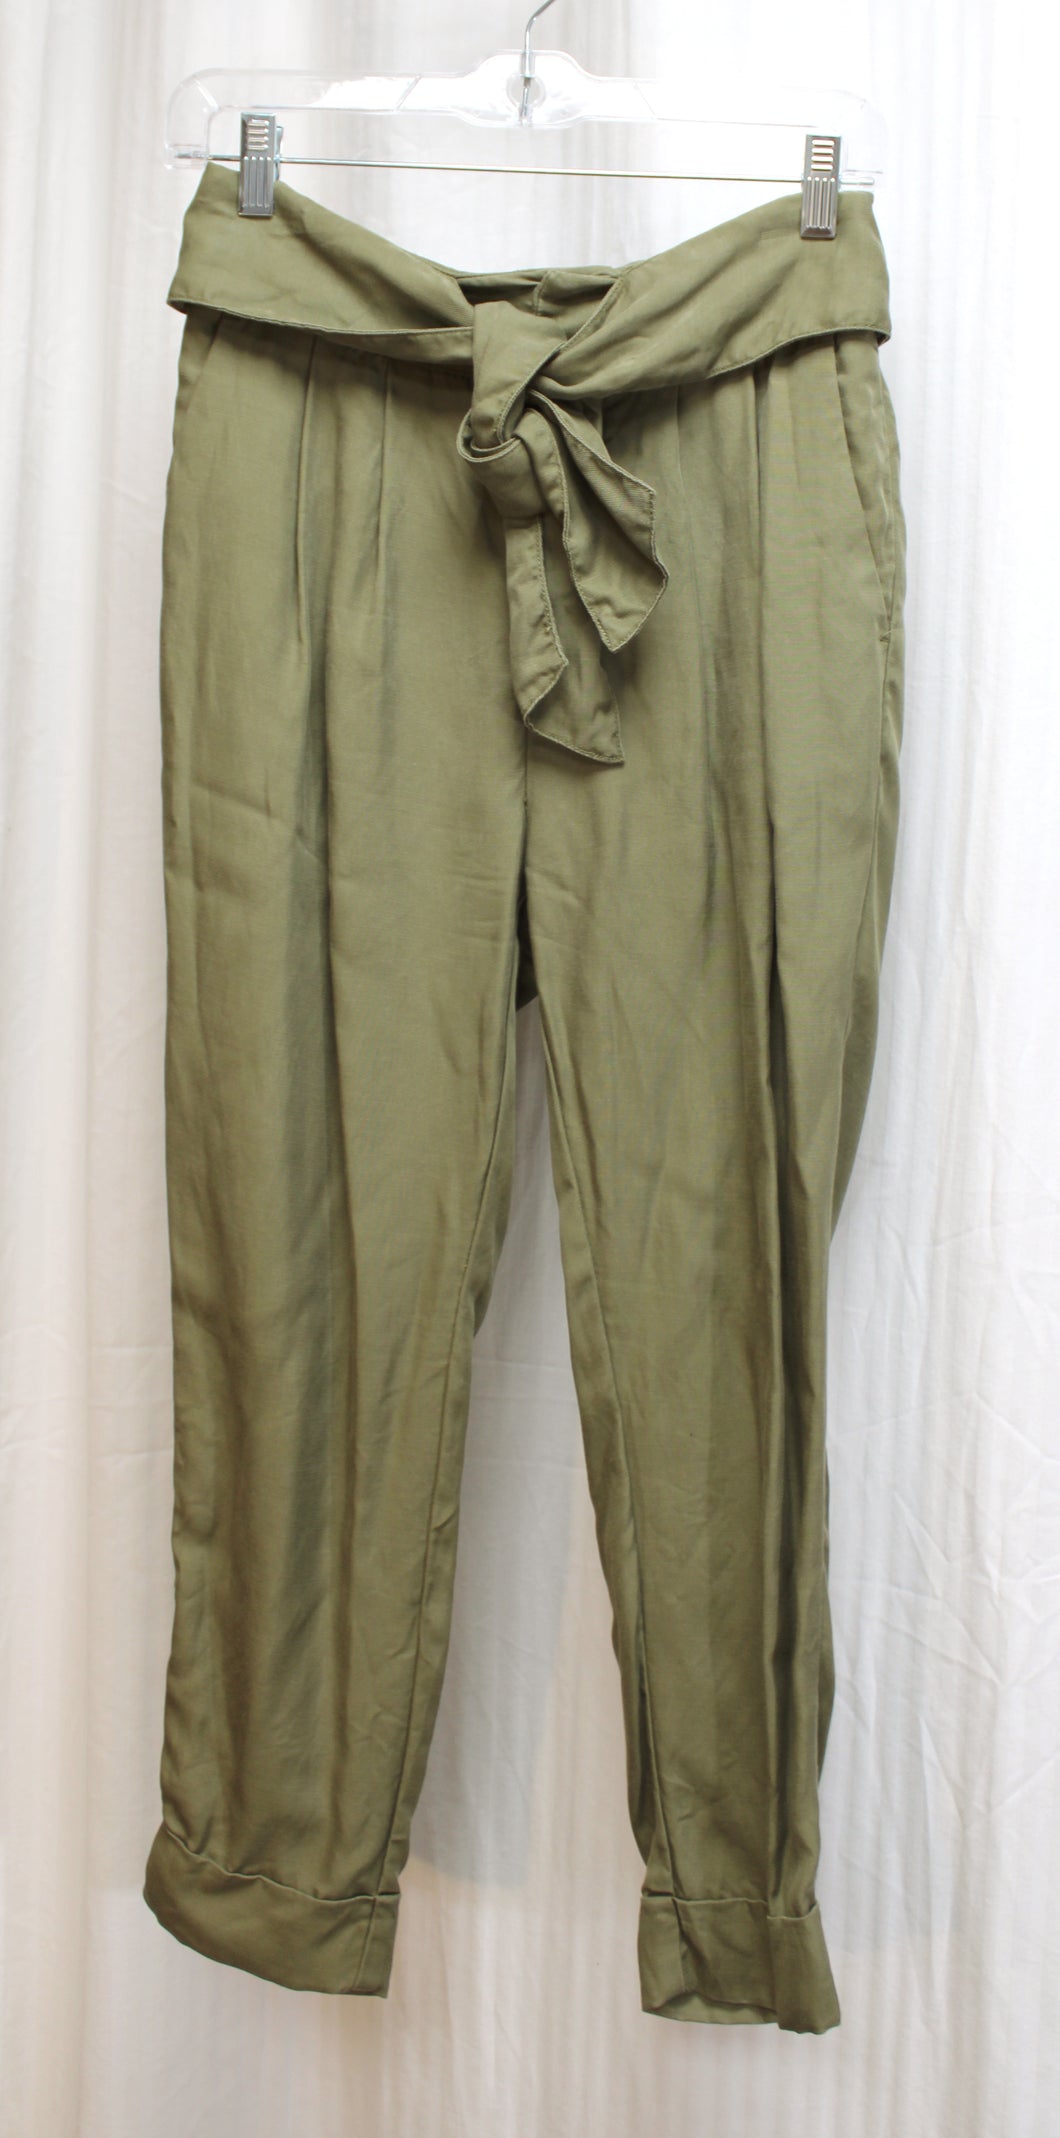 Anthropologie, Cartonnier - High Waisted Cuffed Hem Khaki Green Tie Waisted Pants - Size 0 Petite